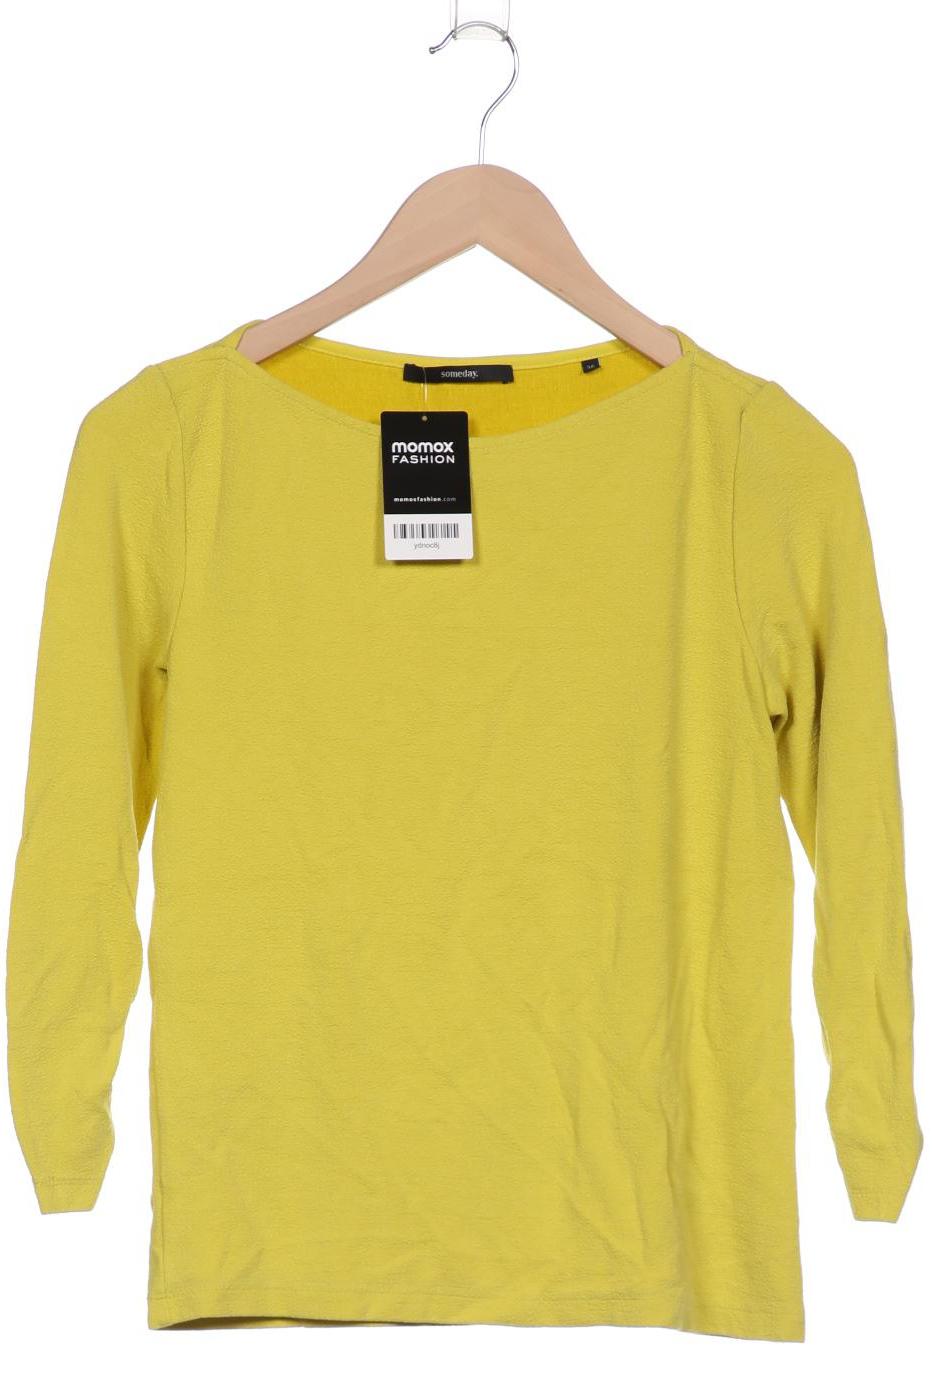 someday. Damen Langarmshirt, gelb, Gr. 36 von someday.